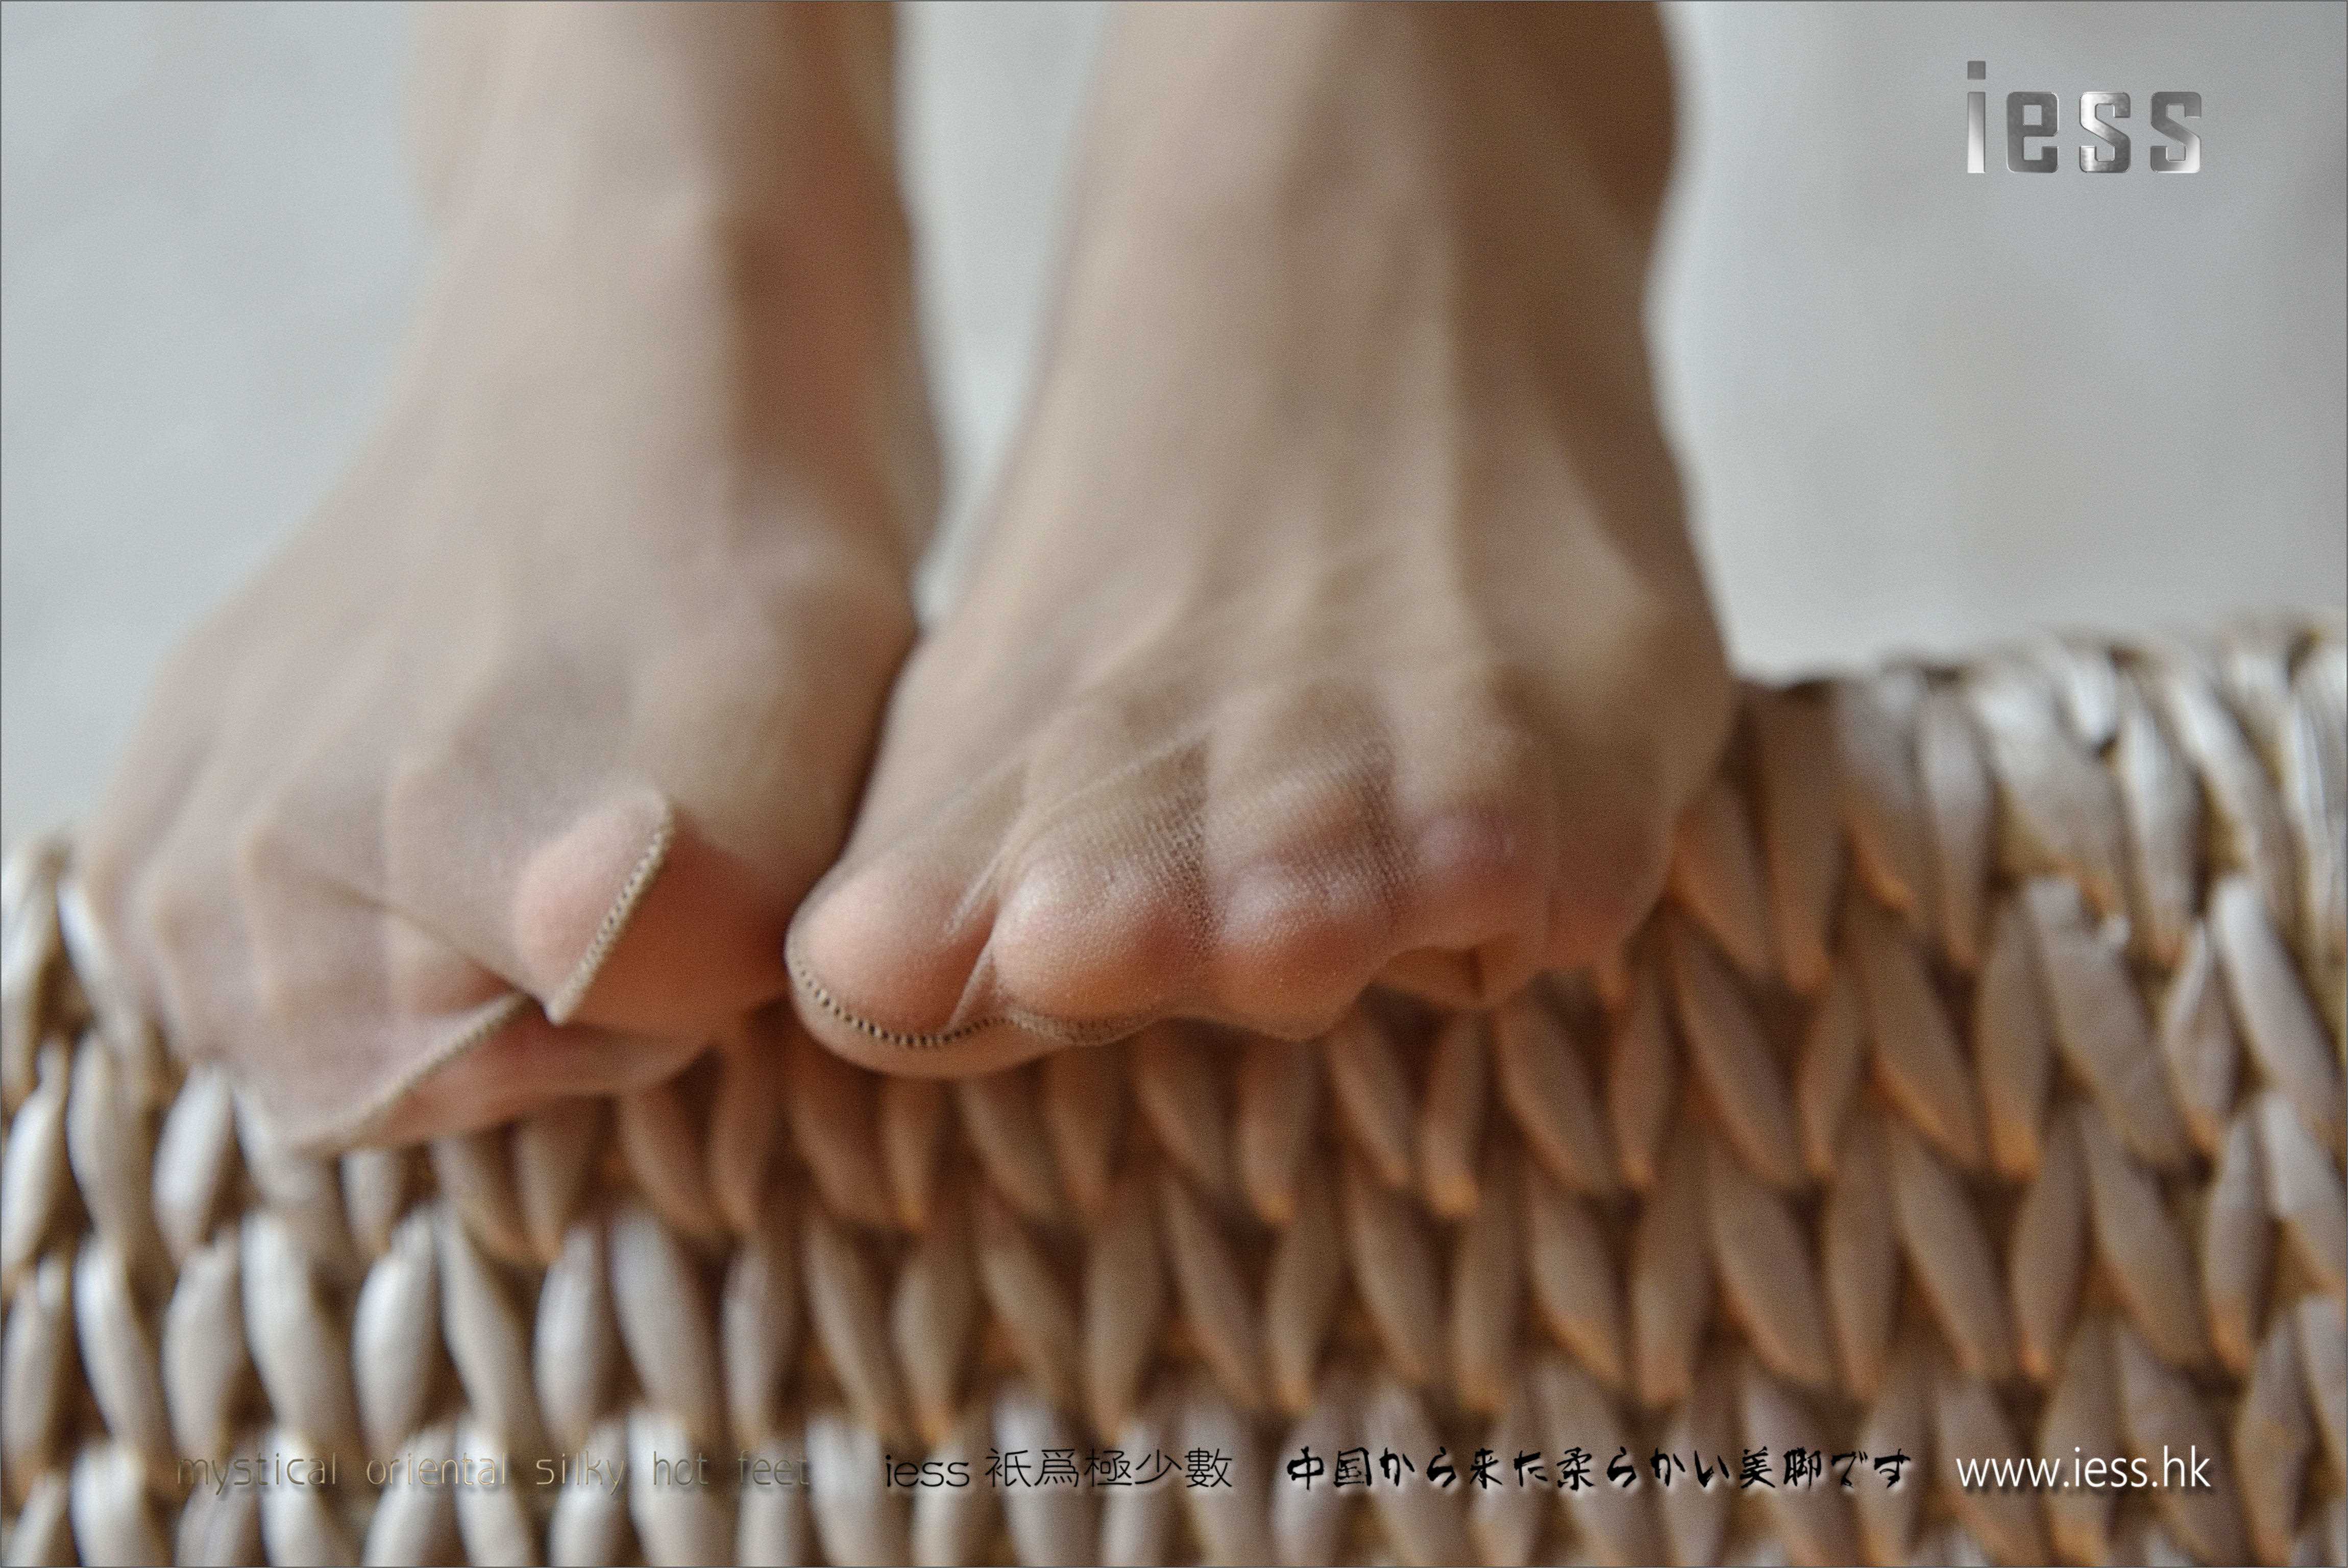 China Beauty Legs and feet 185